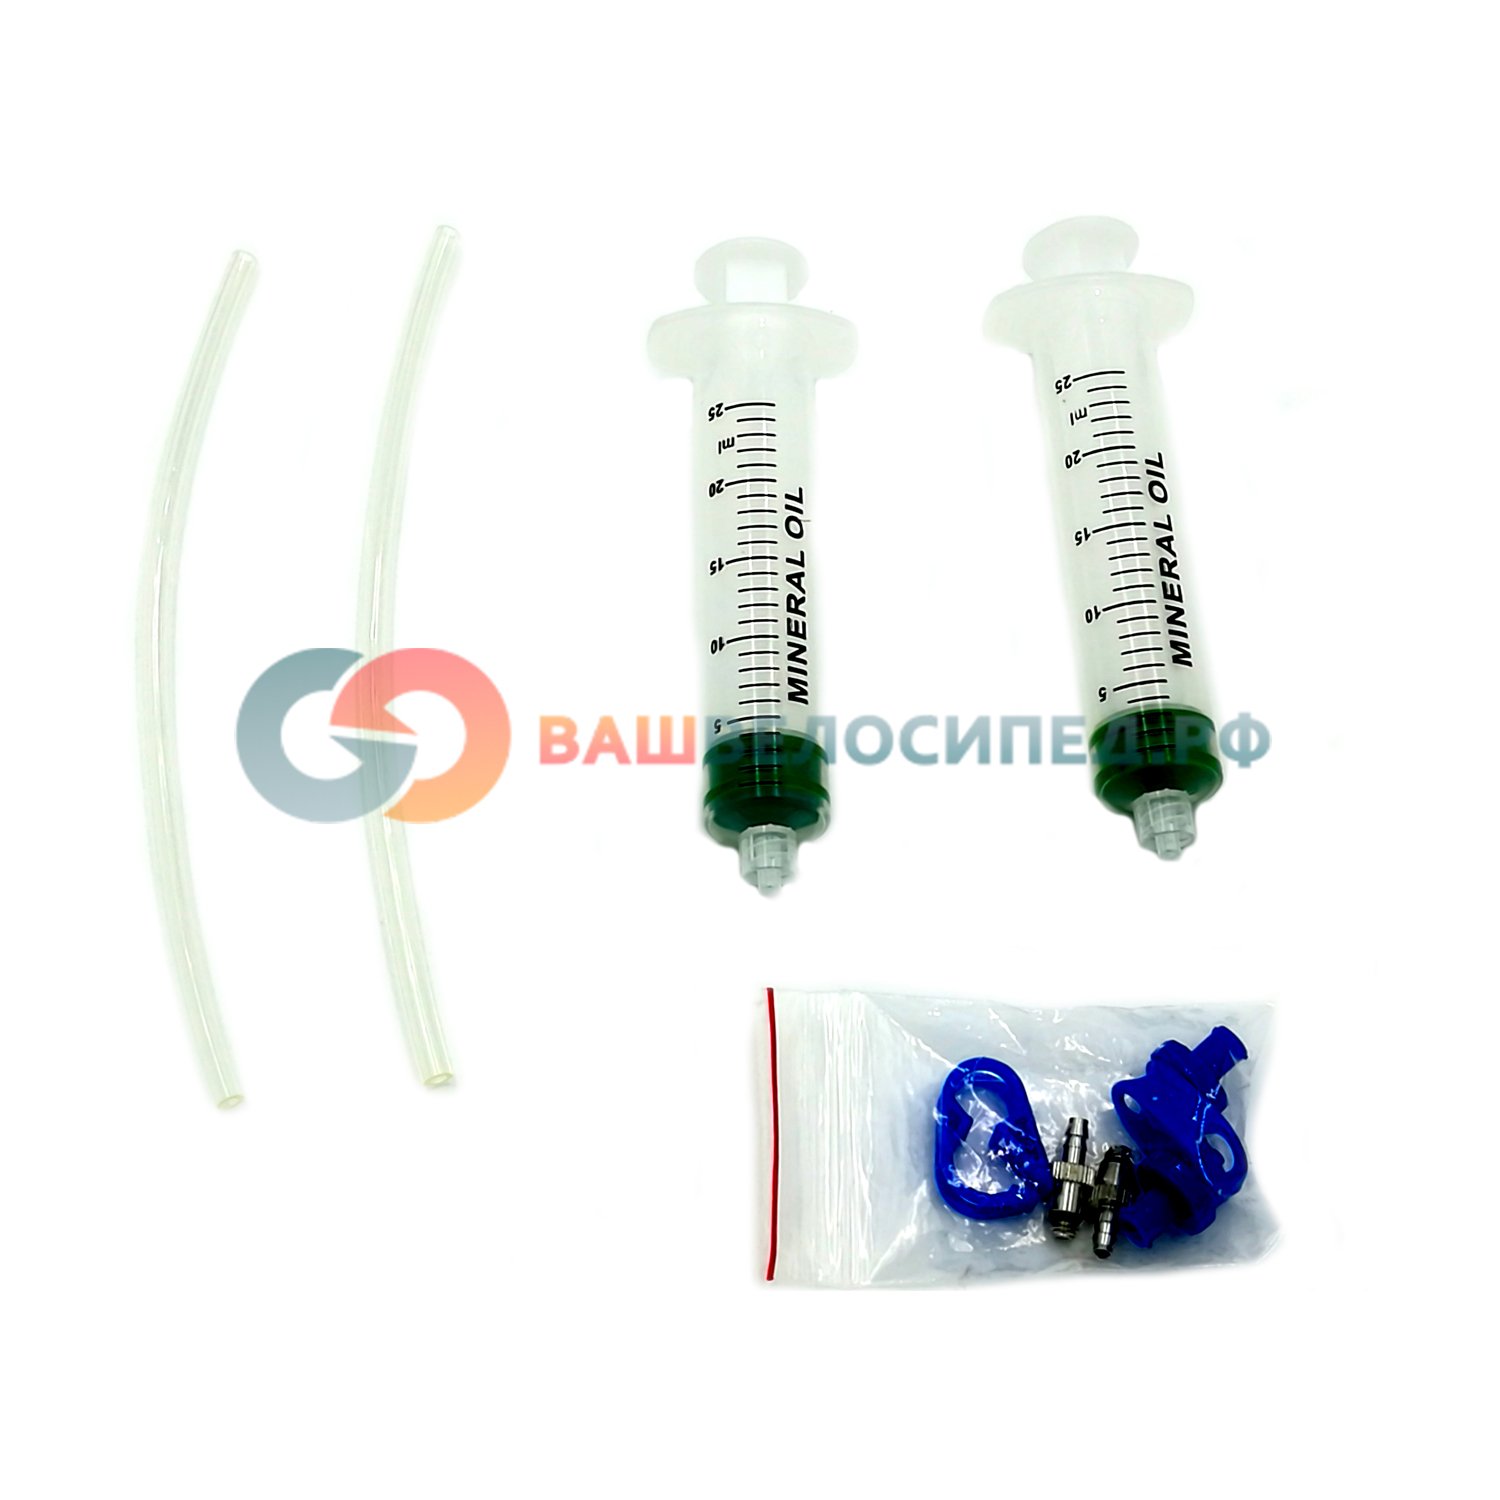 Комплект вело для прокачки Formula Mineral oil 2 syringe bleeding kit (20мл) купить на ЖДБЗ.ру - фотография № 3